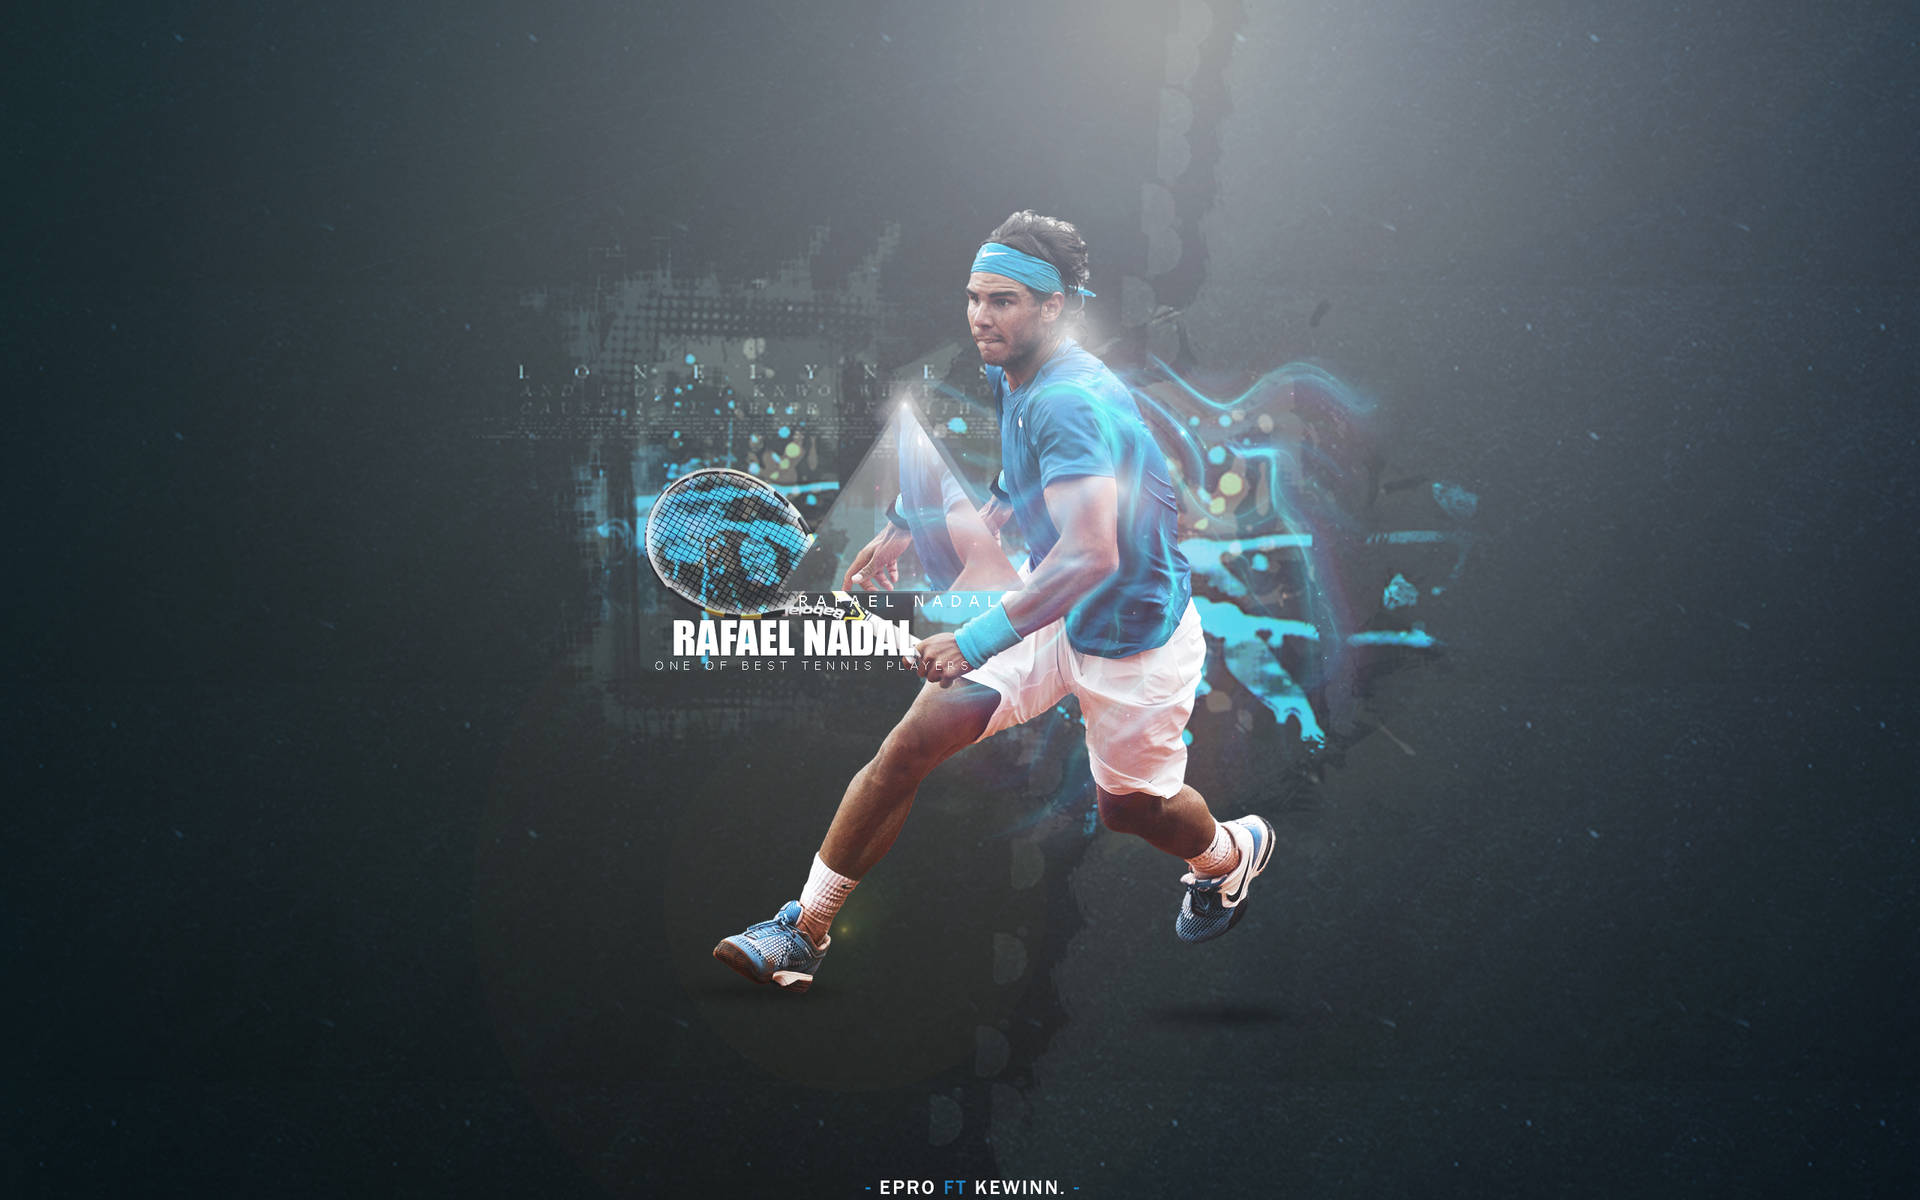 Rafael Nadal Stylish Edit Poster Background